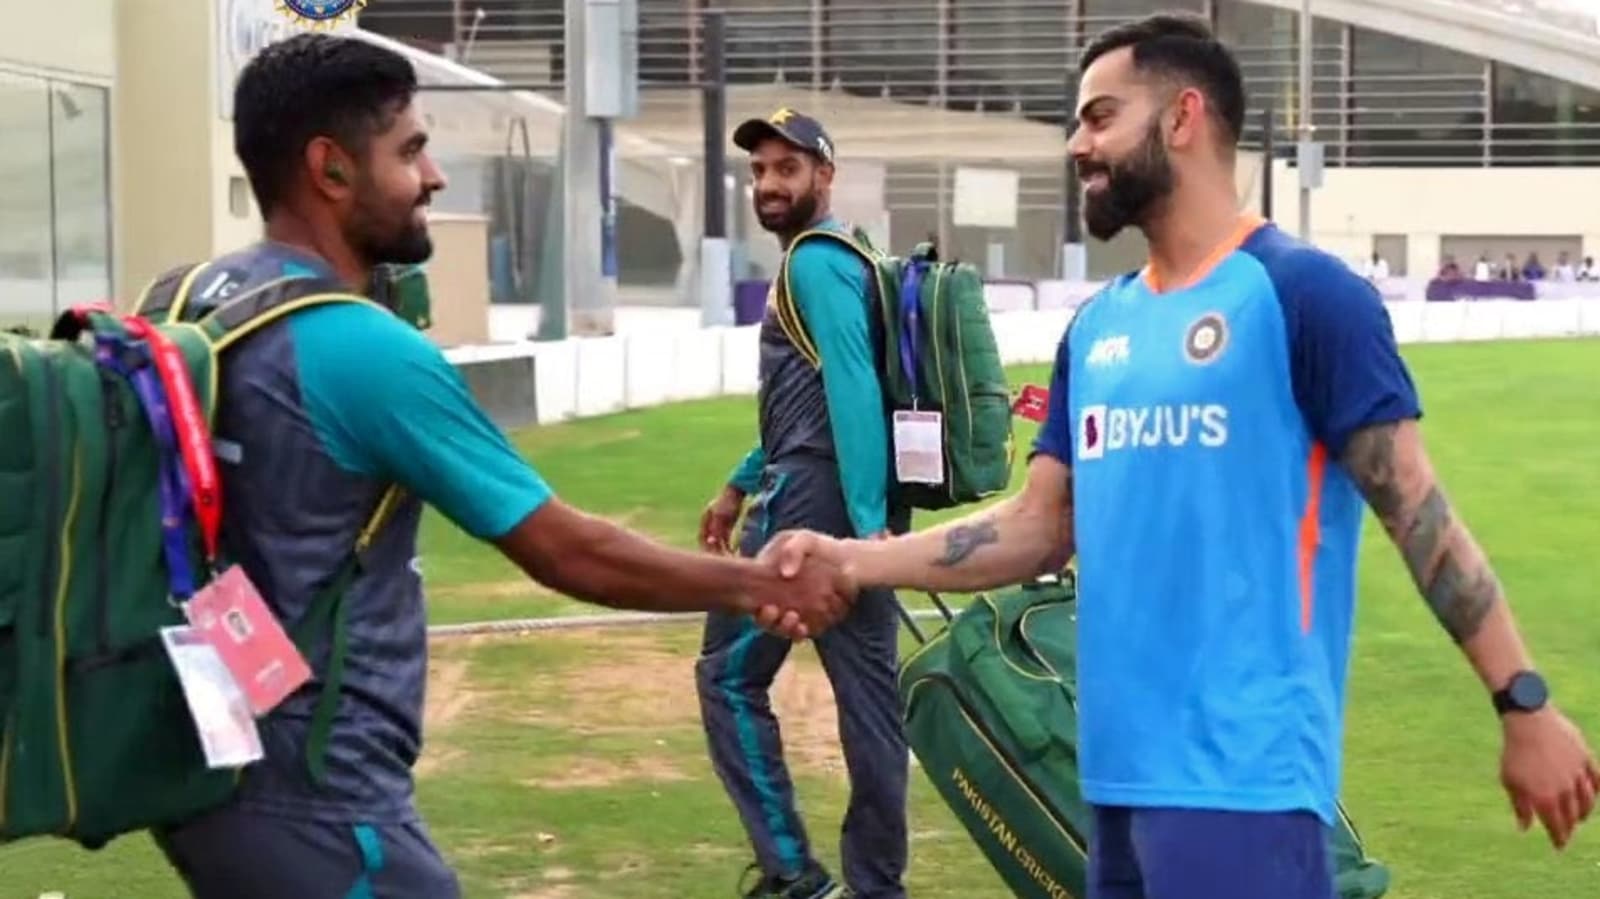 psl-team-tweets-virat-kohli-babar-azam-s-handshake-photo-receives-outrageous-replies-from-india-and-pakistan-fans